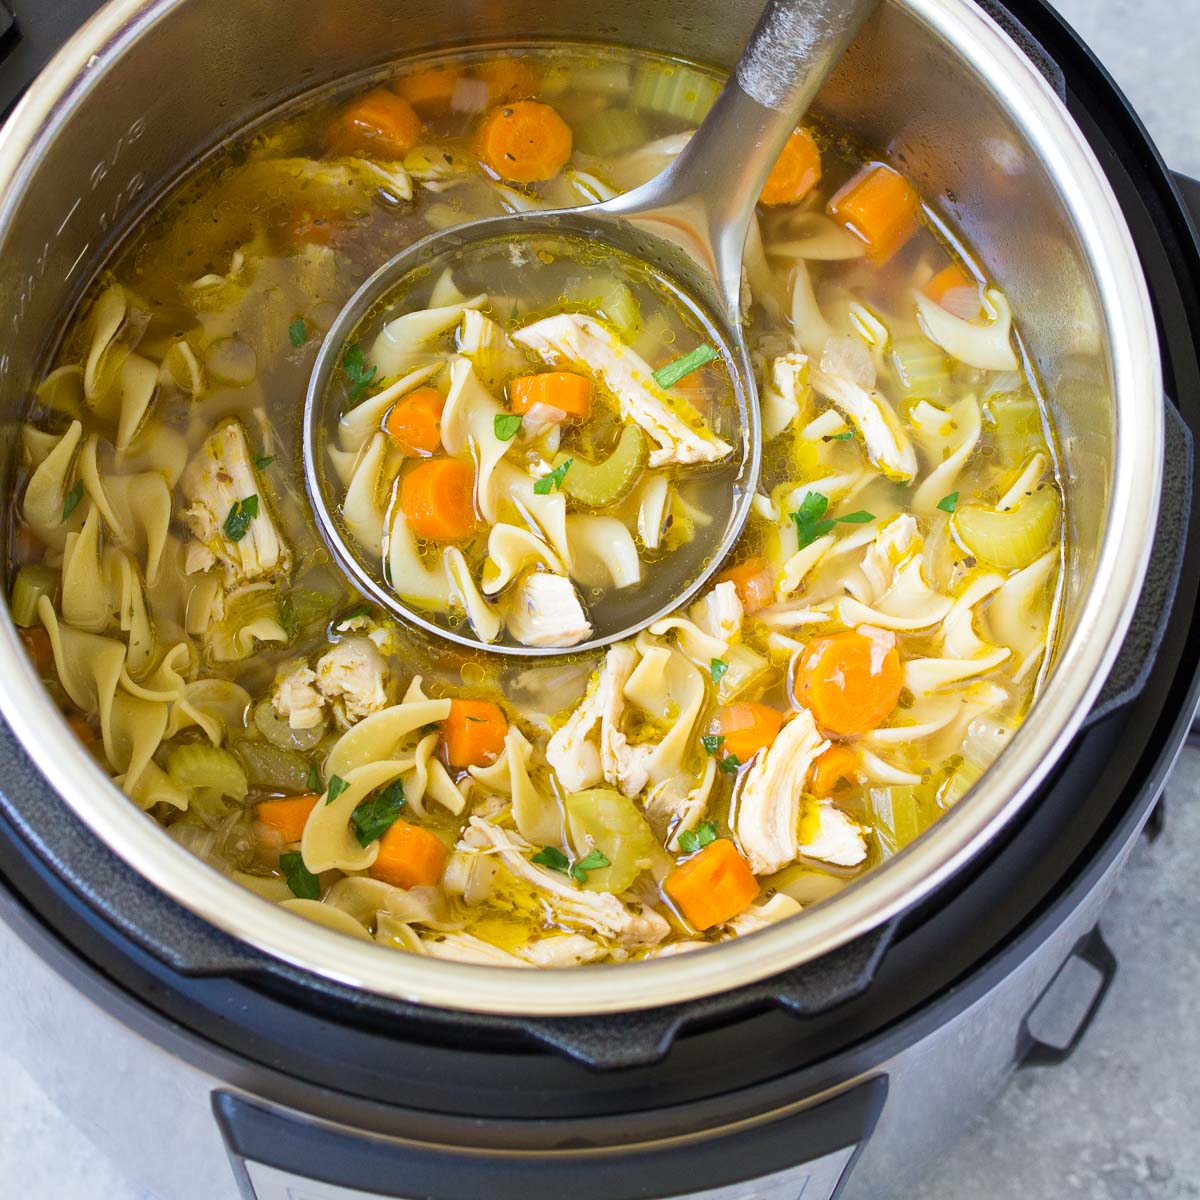 Best Pots for Making Soup